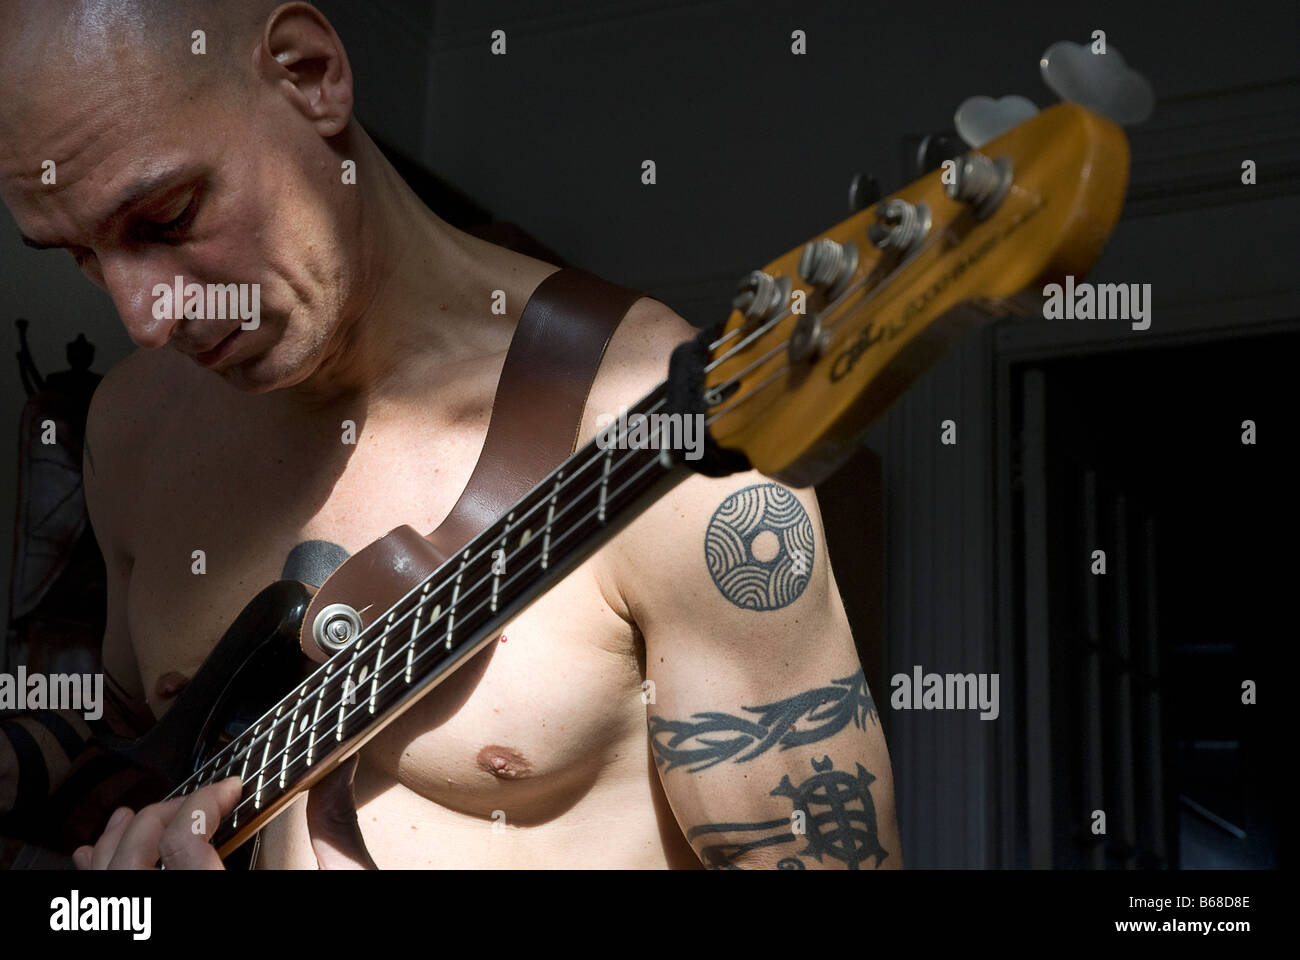 Flea Getting a New Tattoo (May 24, 2020) - YouTube